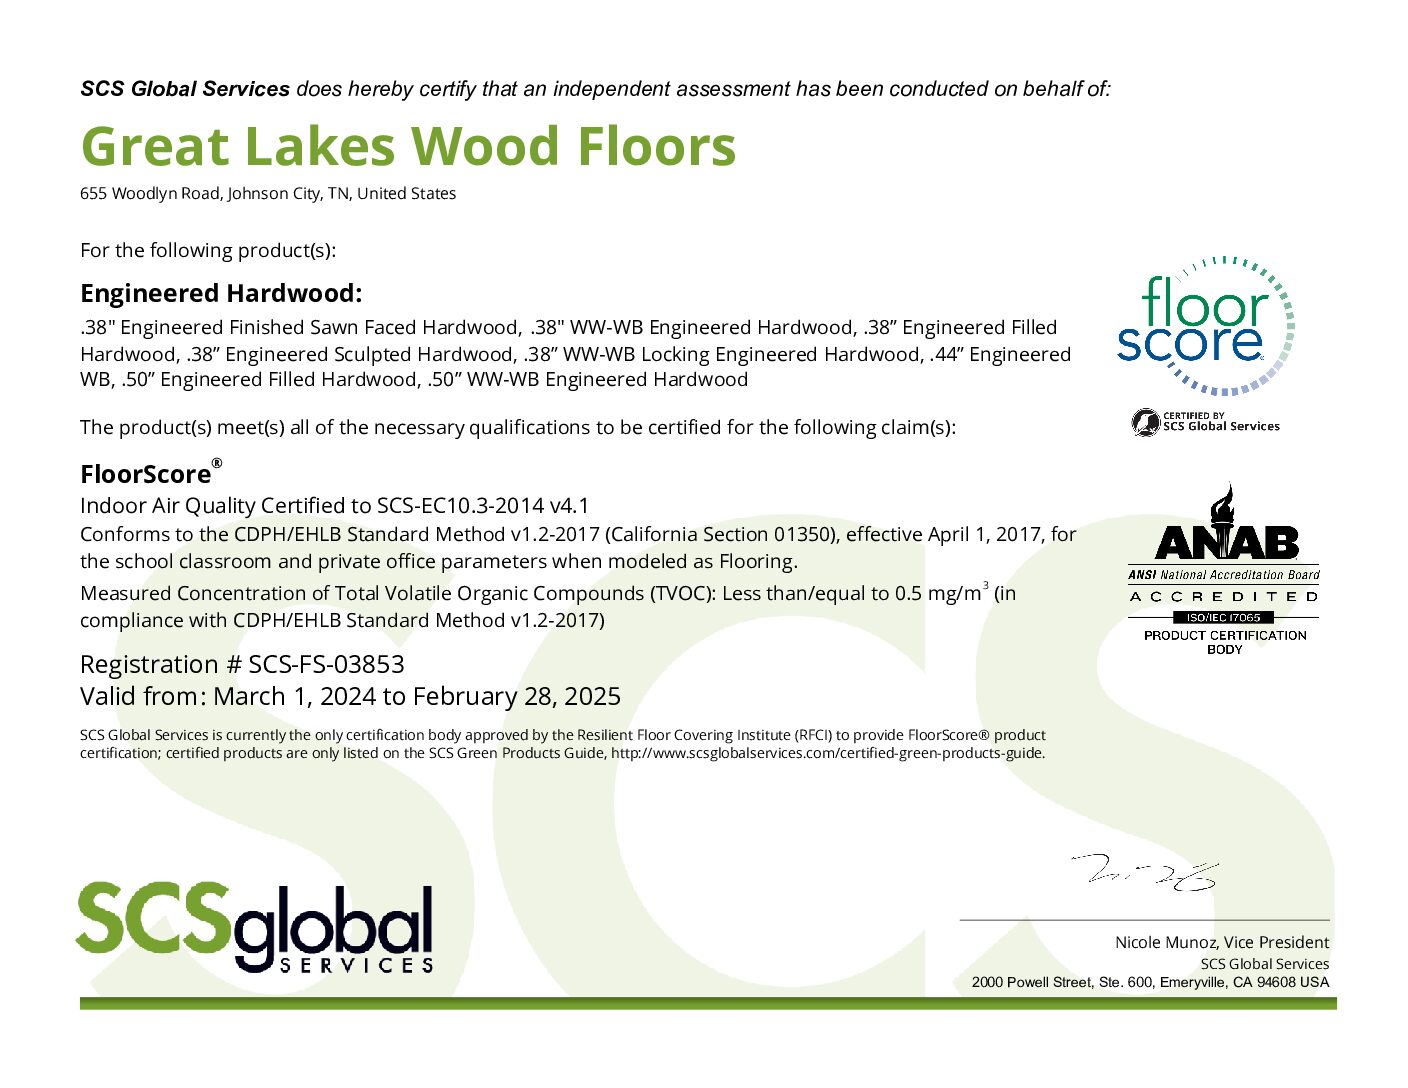 Great Lakes Wood Floors Engineered Hardwood FloorScore® Certificate